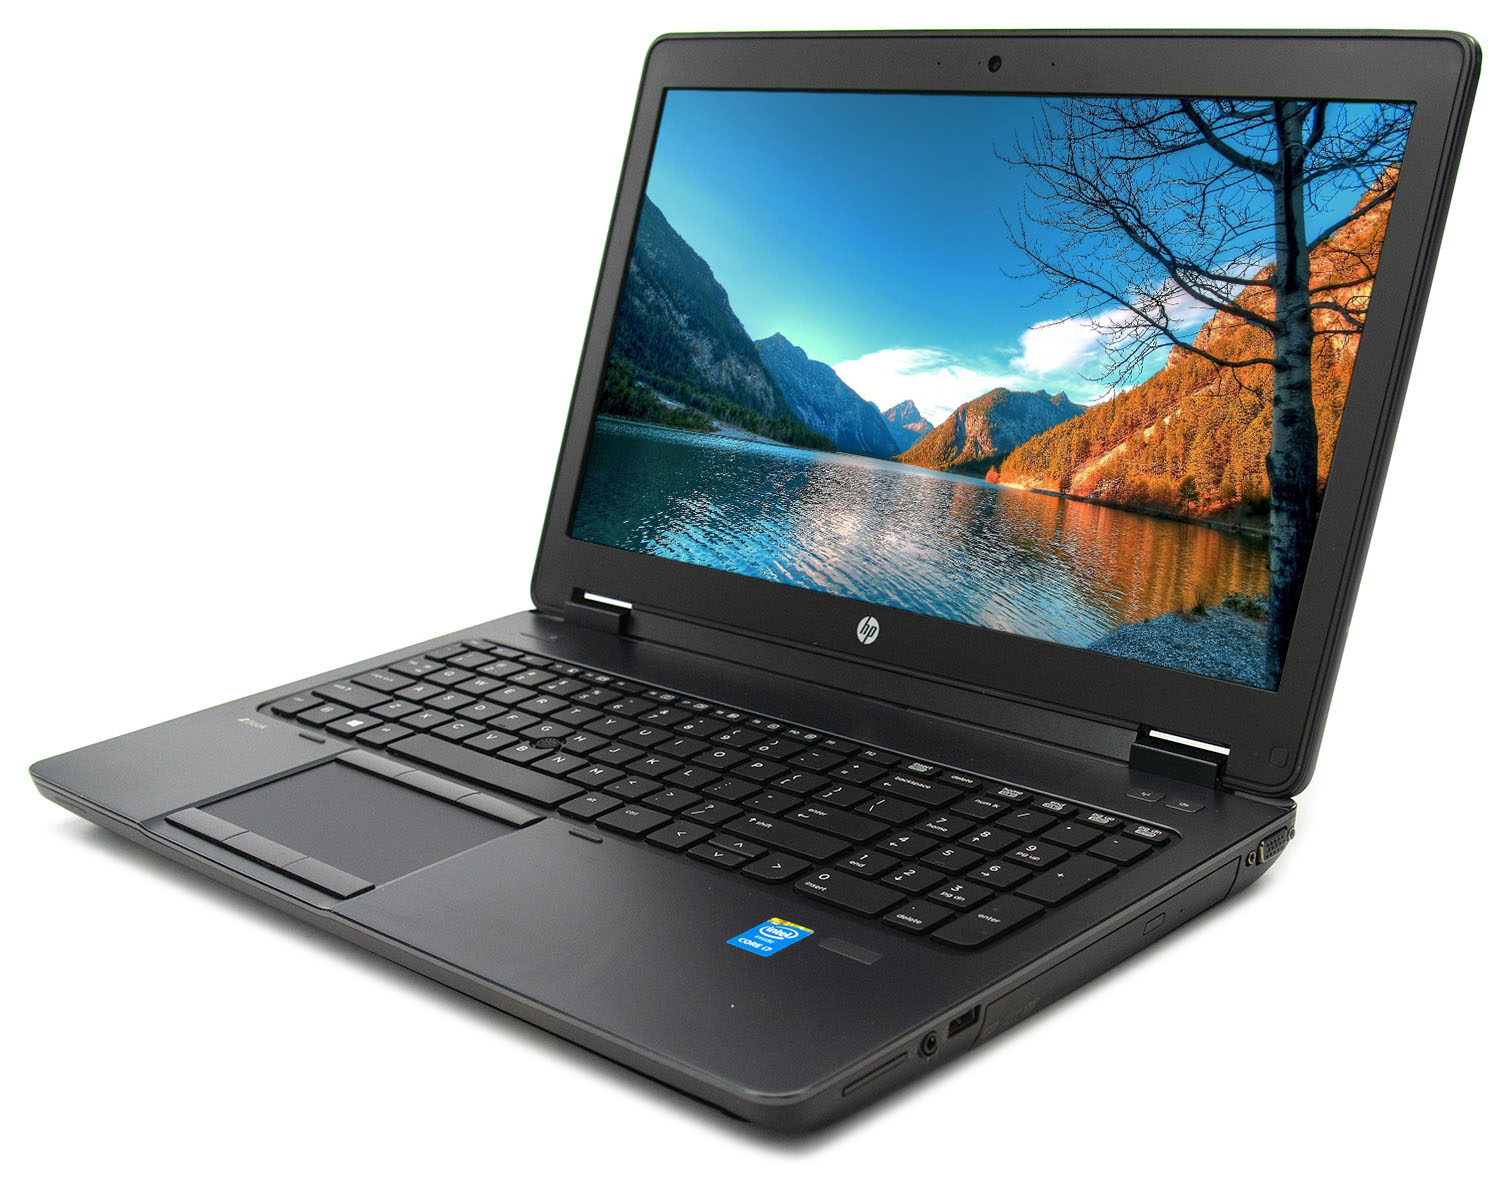 Art. Portátil HP Workstation ZBOOK 15 G2 GRADO B Nvidia K1100M 2GB (Intel Core i7 4710MQ 2.5Ghz/16GB/240SSD/15.6"FHD/DVDRW/W8P) Preinstalado